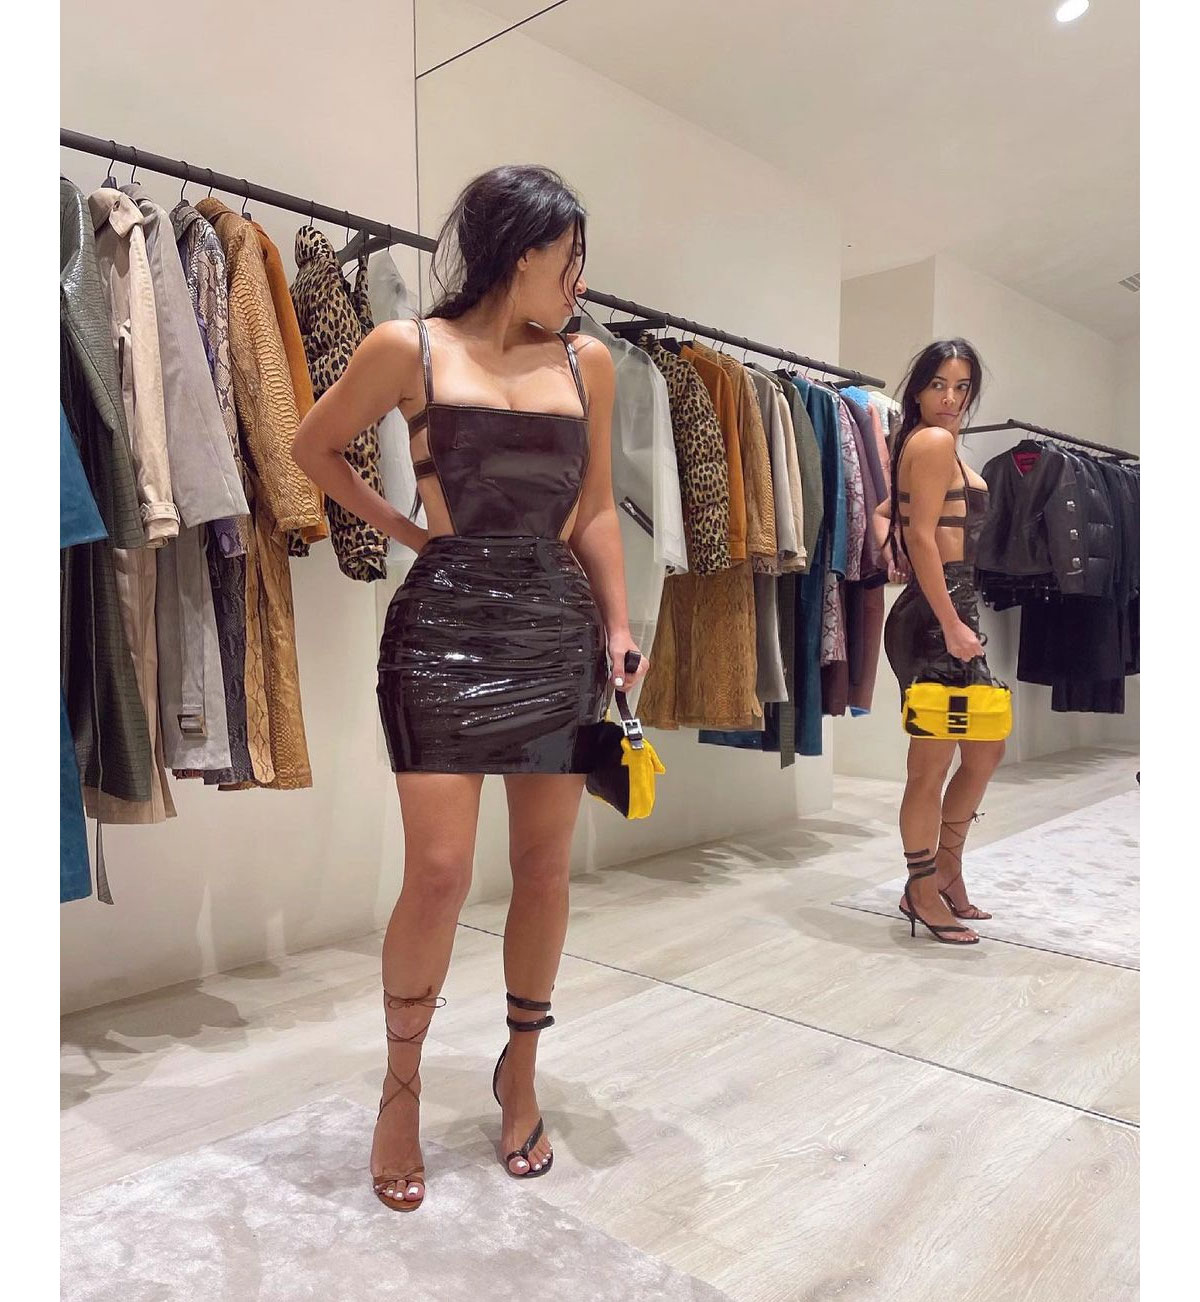 Kim Kardashian shares throwback photos from past fashion fittings